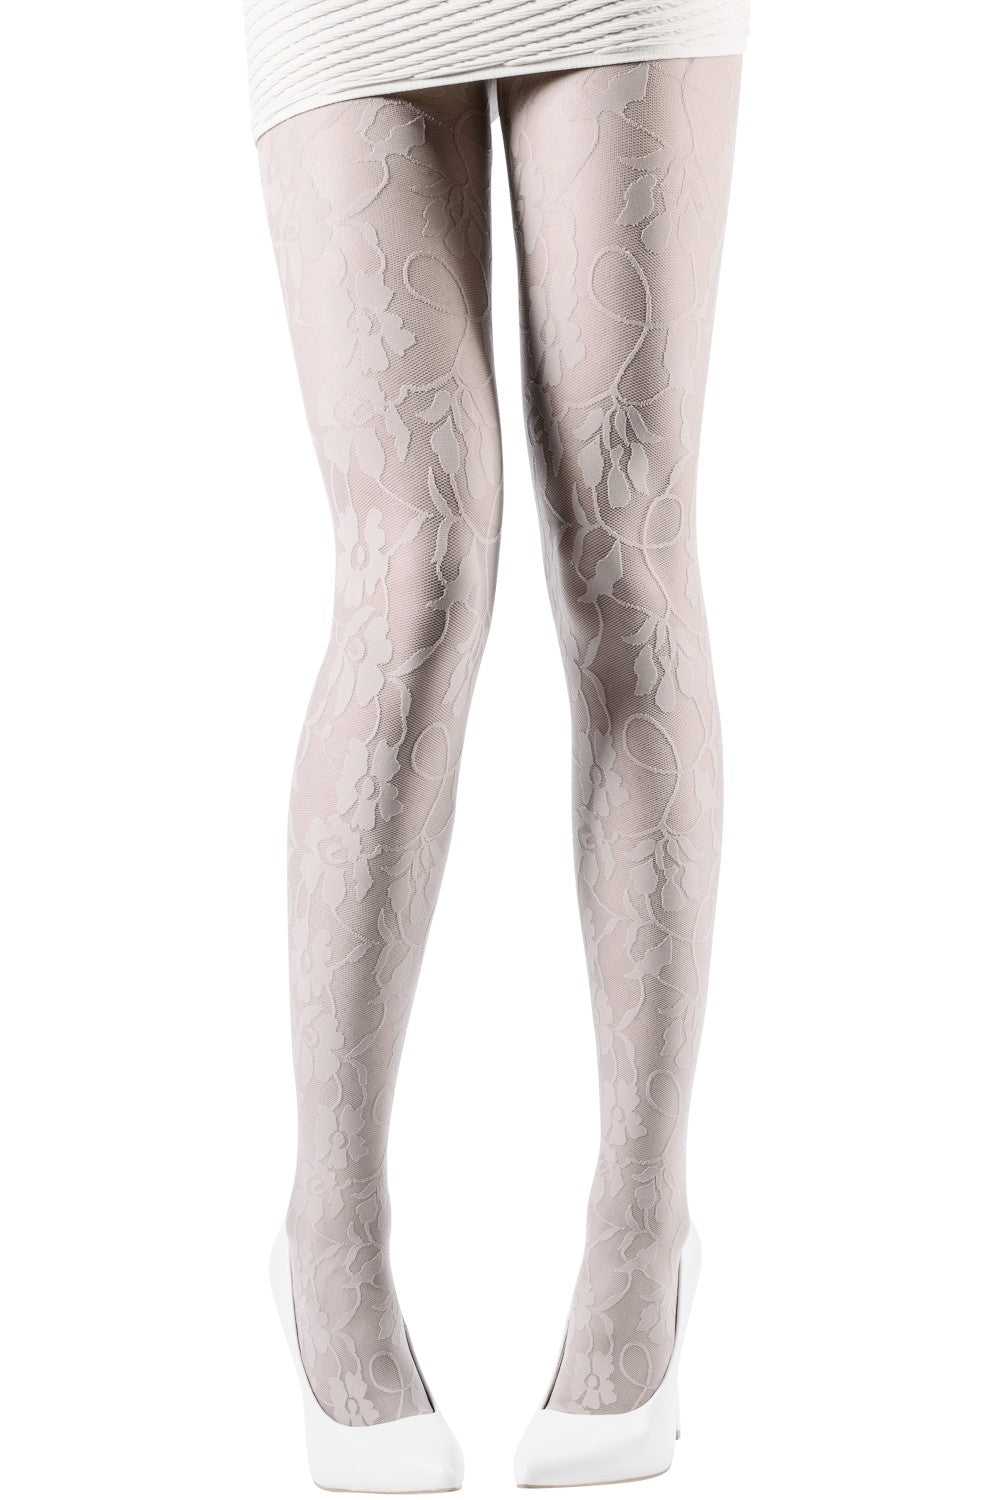 Emilio Cavallini Contemporary Lace Tights - floral and swirl lace tights in white